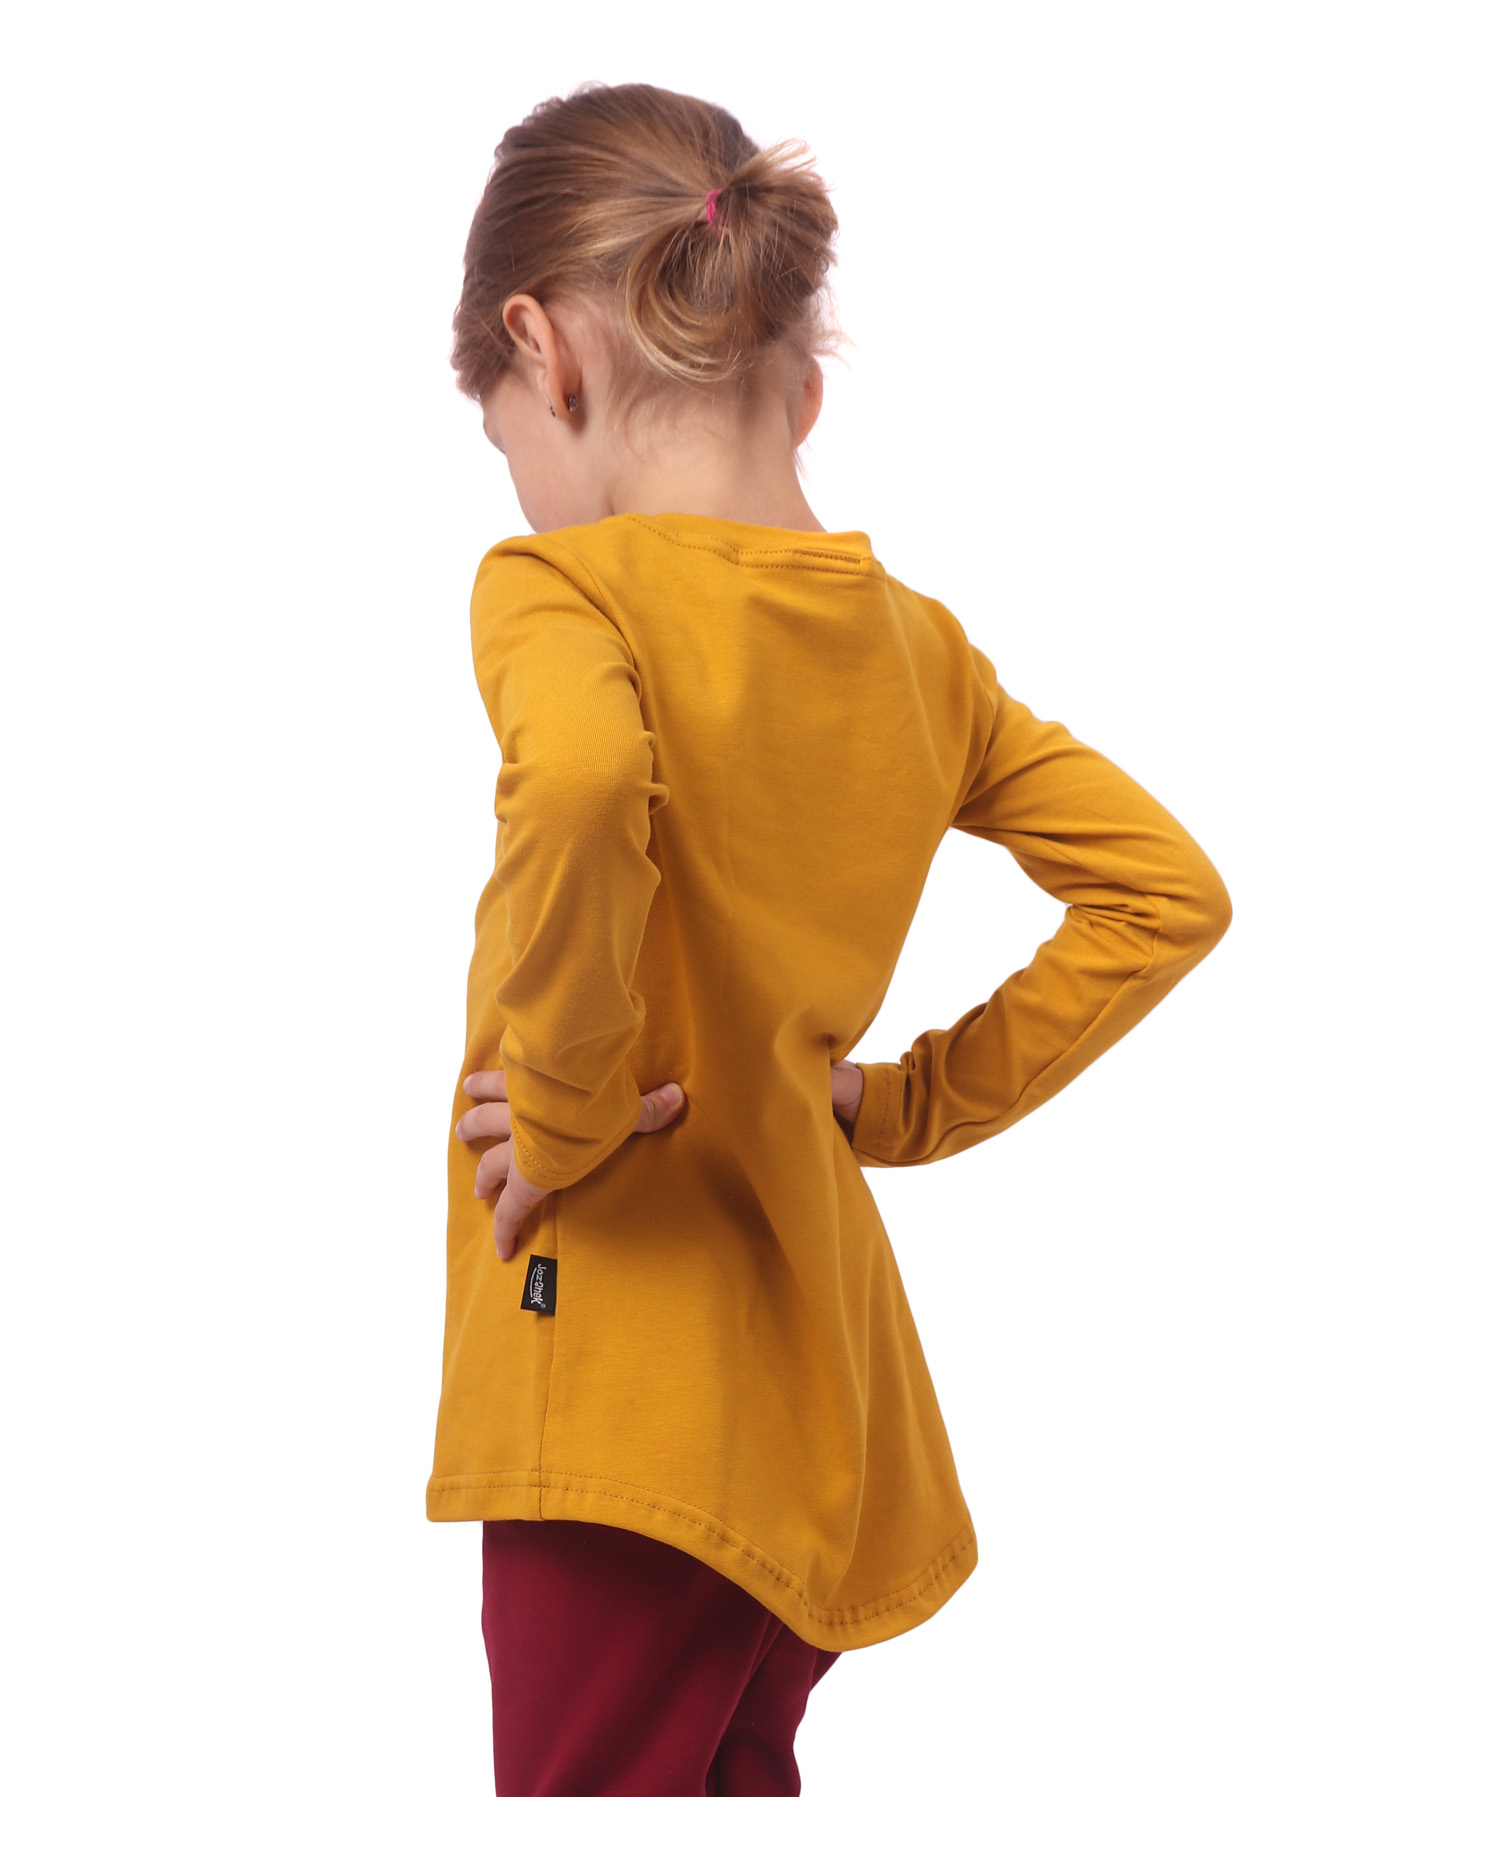 Girl's T-shirt, long sleeve, mustard